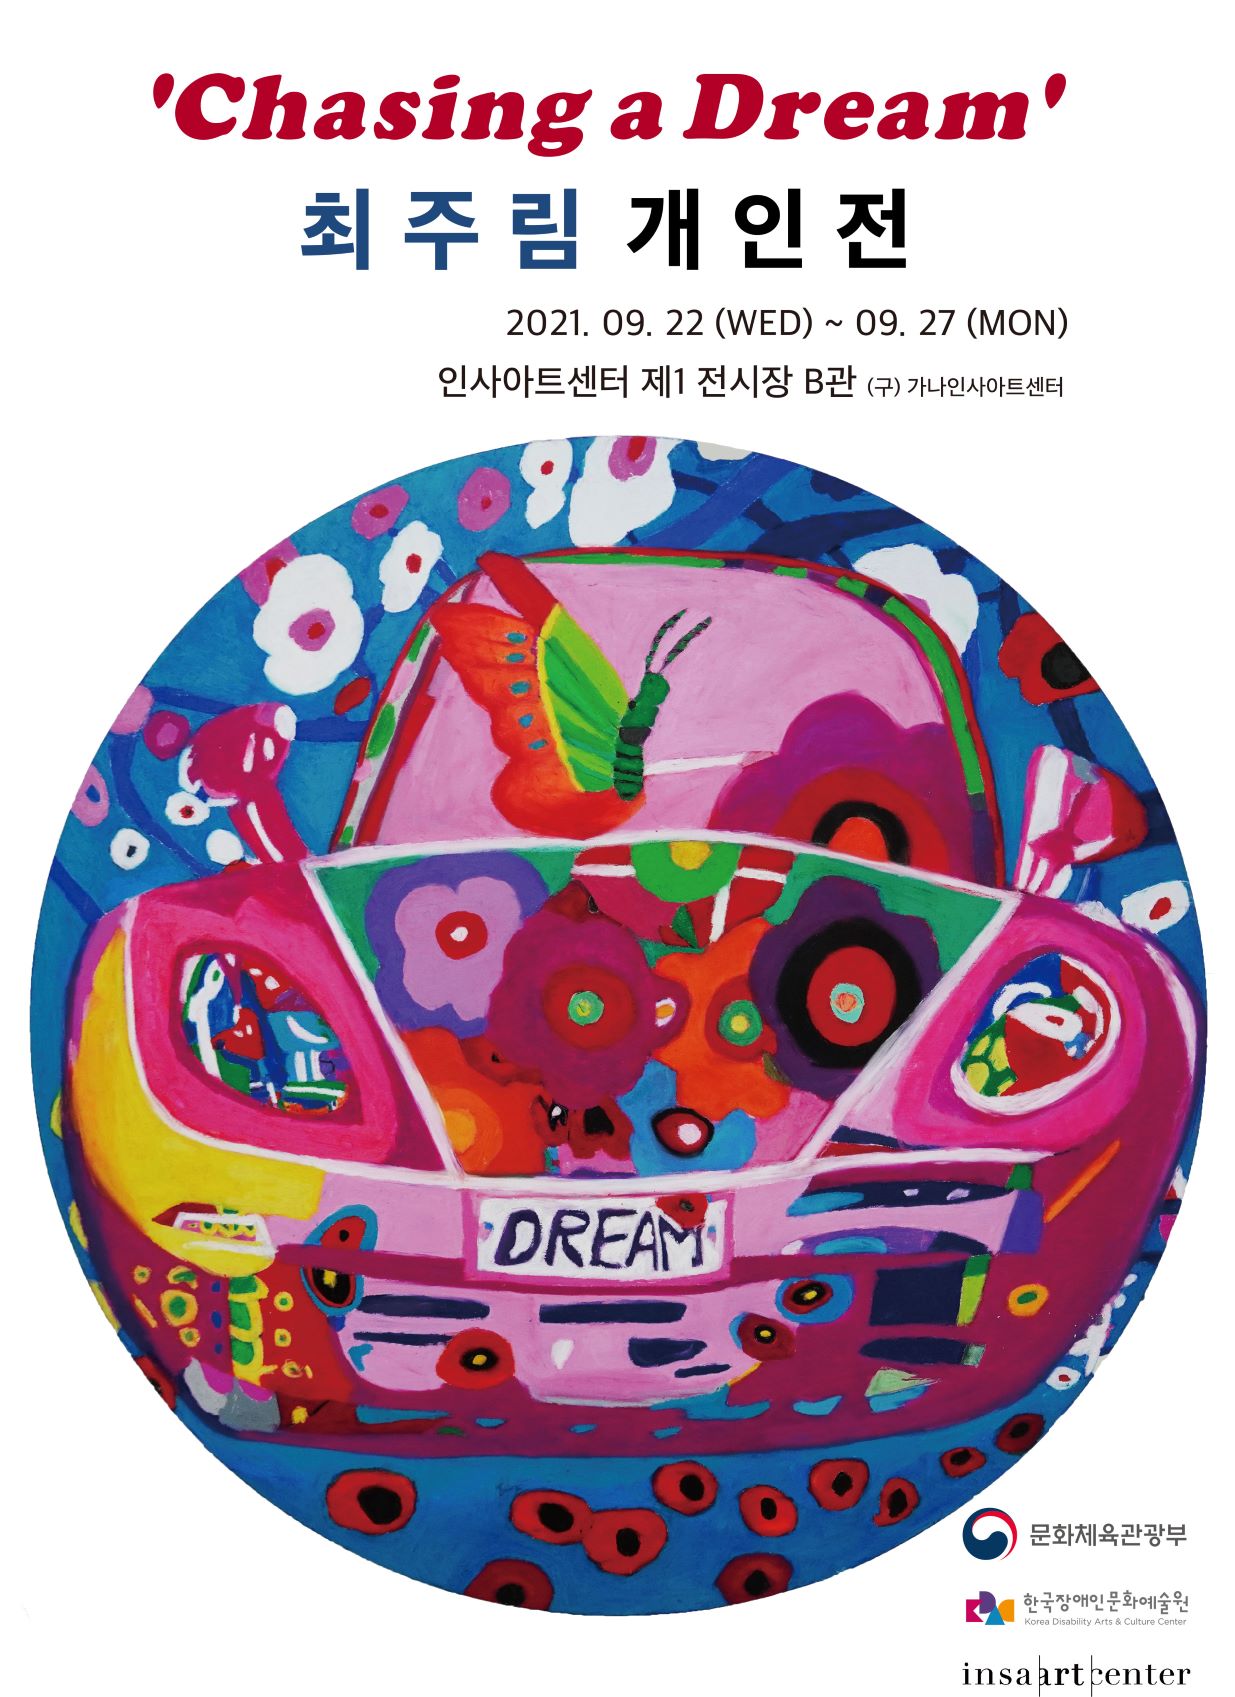 'Chasing a Dream'
최주림 개인전
2021.09.22 (WED) ~ 09.27 (MON)
인사아트센터 제1 전시장 B관 (구) 가나인사아트센터

문화체육관광부
한국장애인문화예술원
인사아트센터